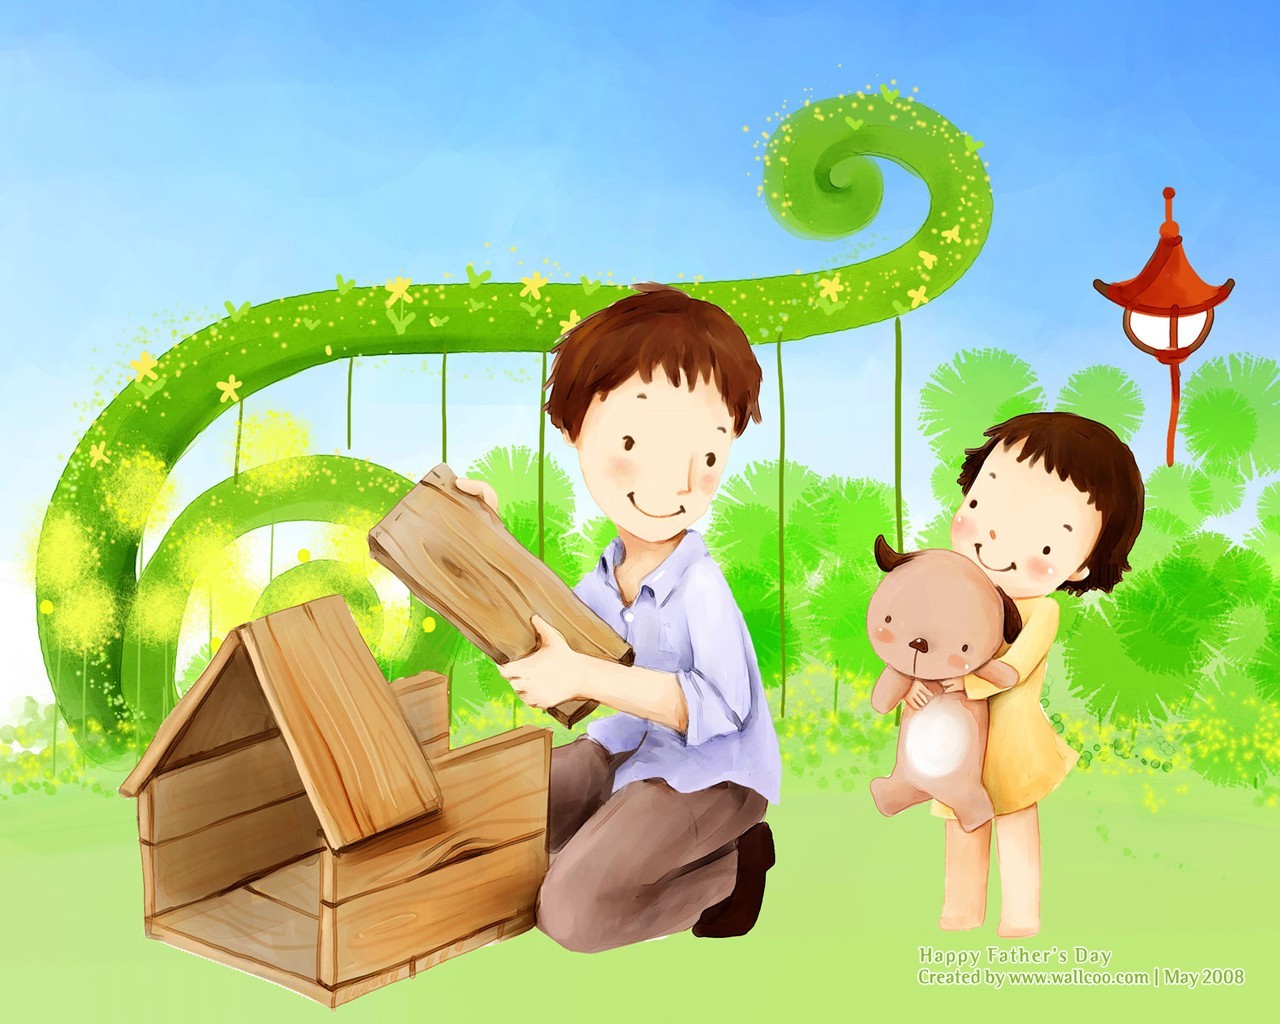 Father's Day theme of South Korean illustrator wallpaper #10 - 1280x1024